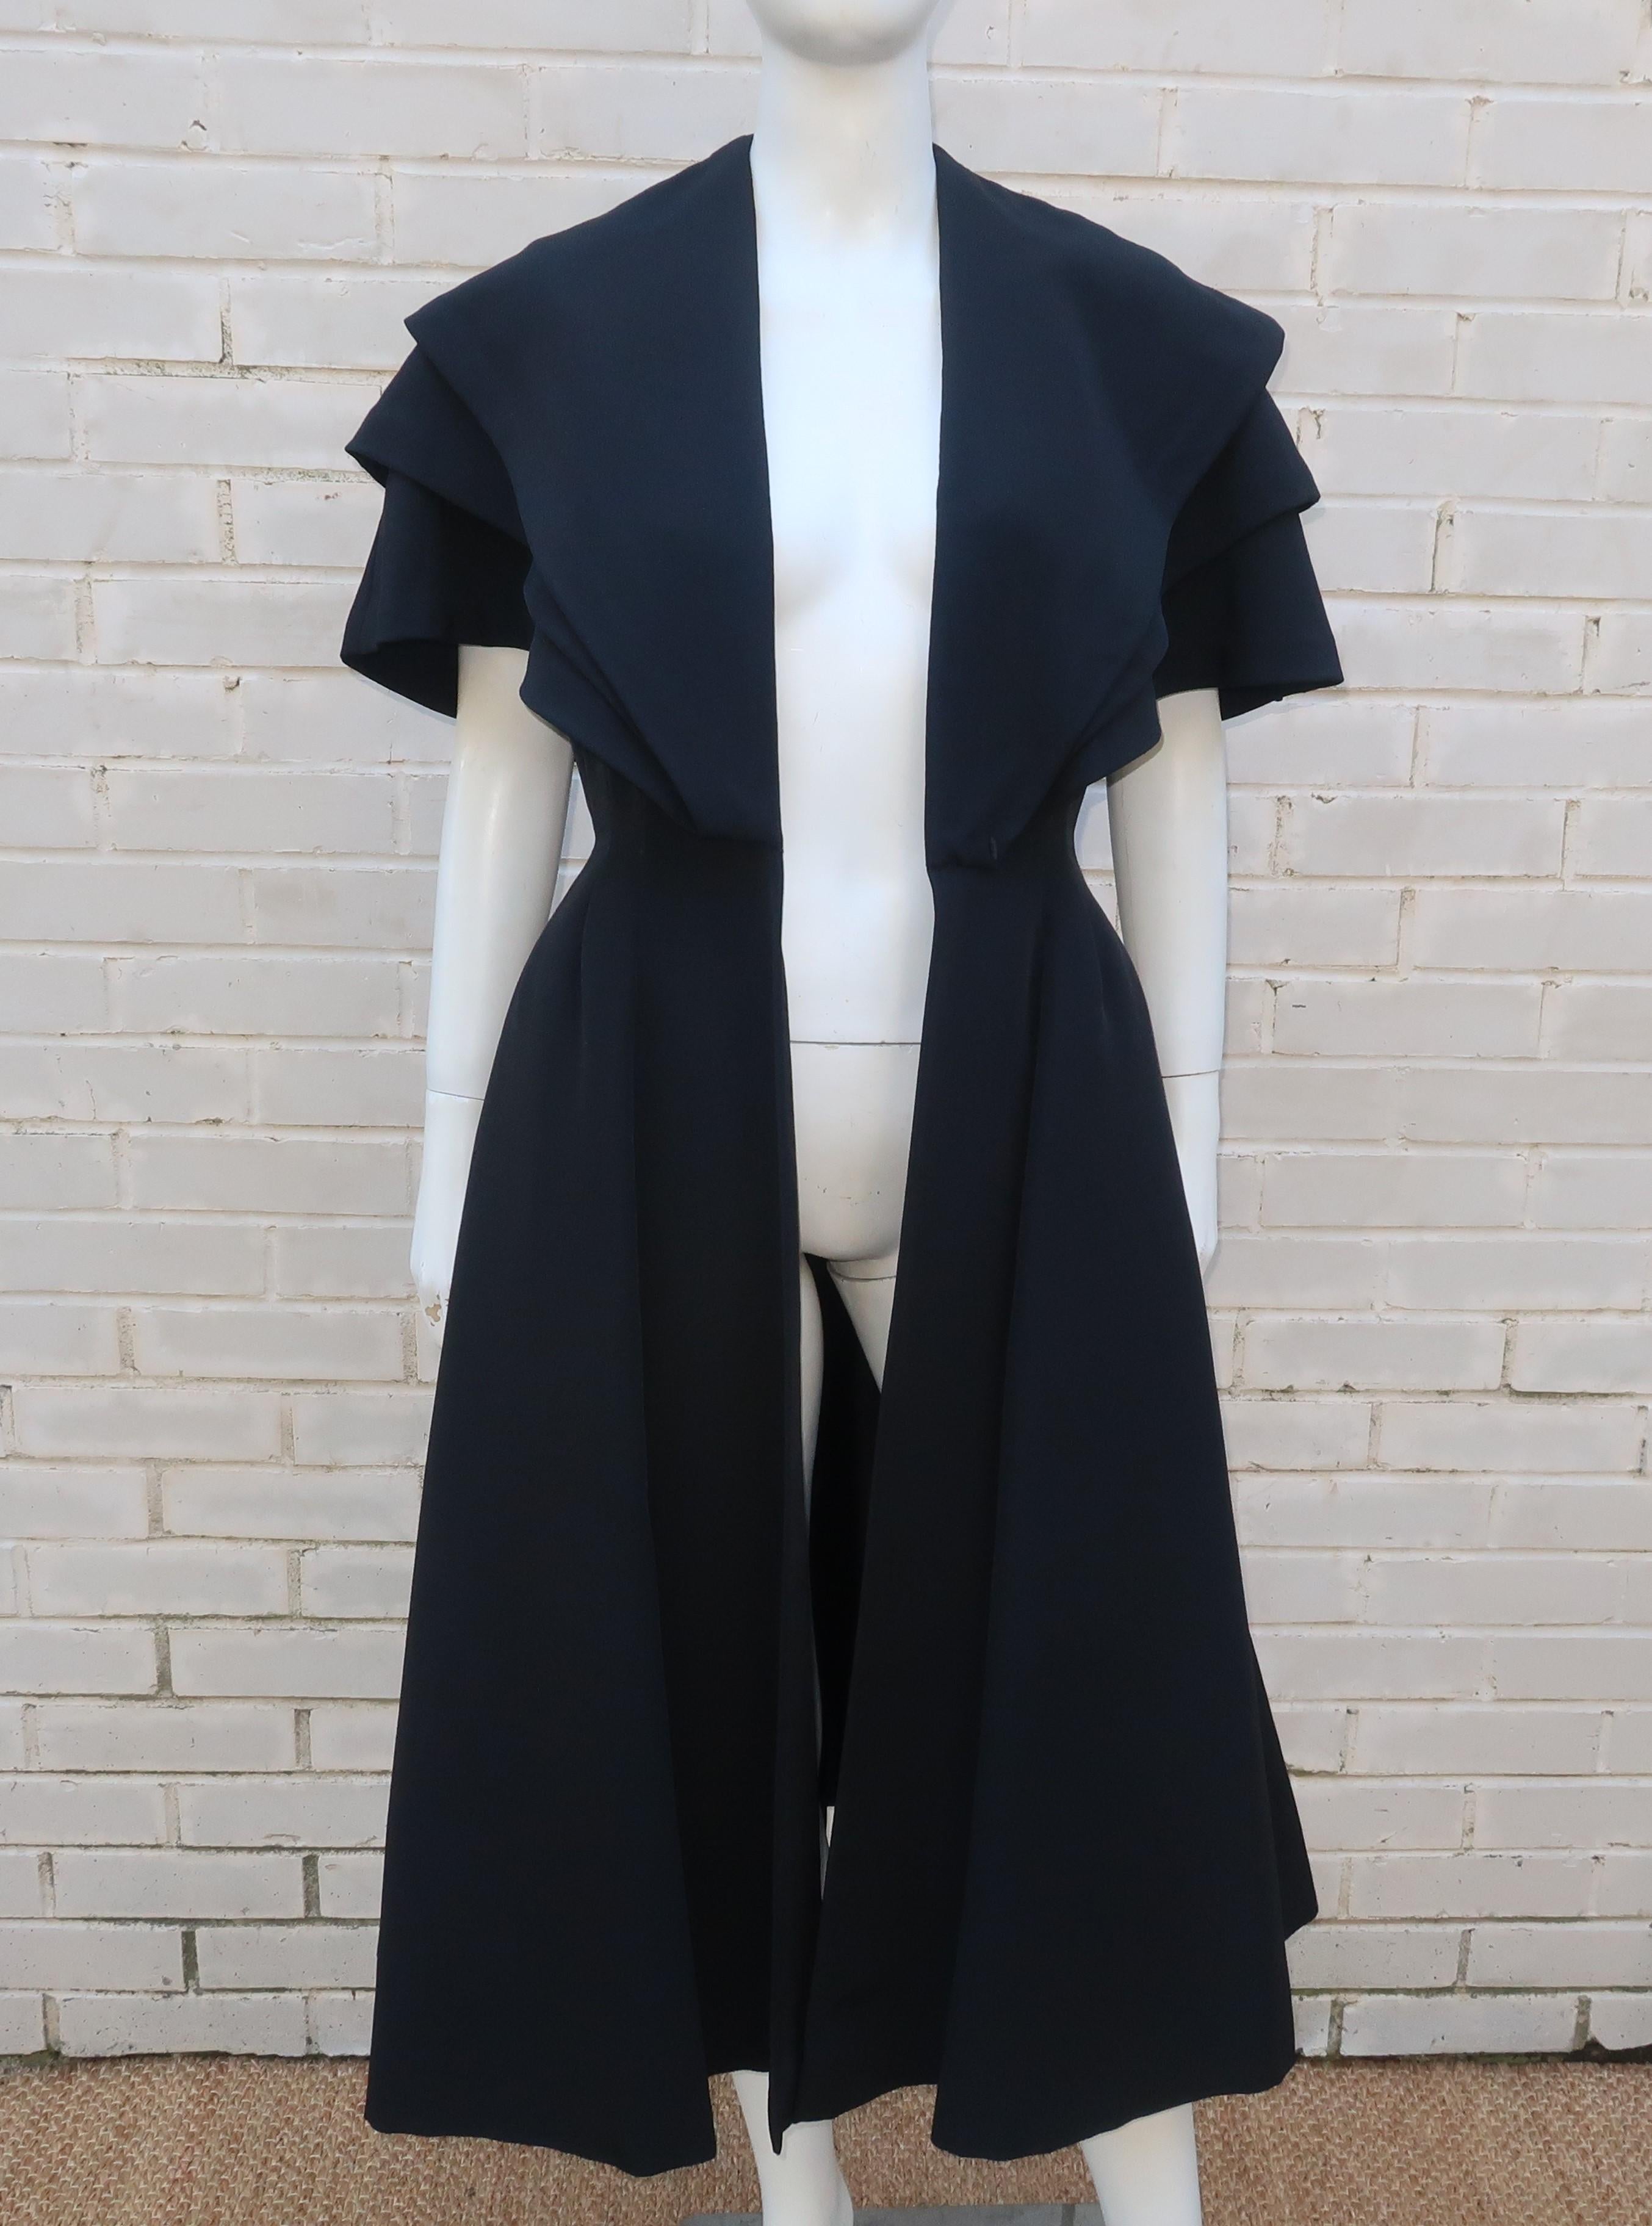 Bonwit Teller 'New Look' Black Silk Faille Evening Coat Dress, C.1950 4